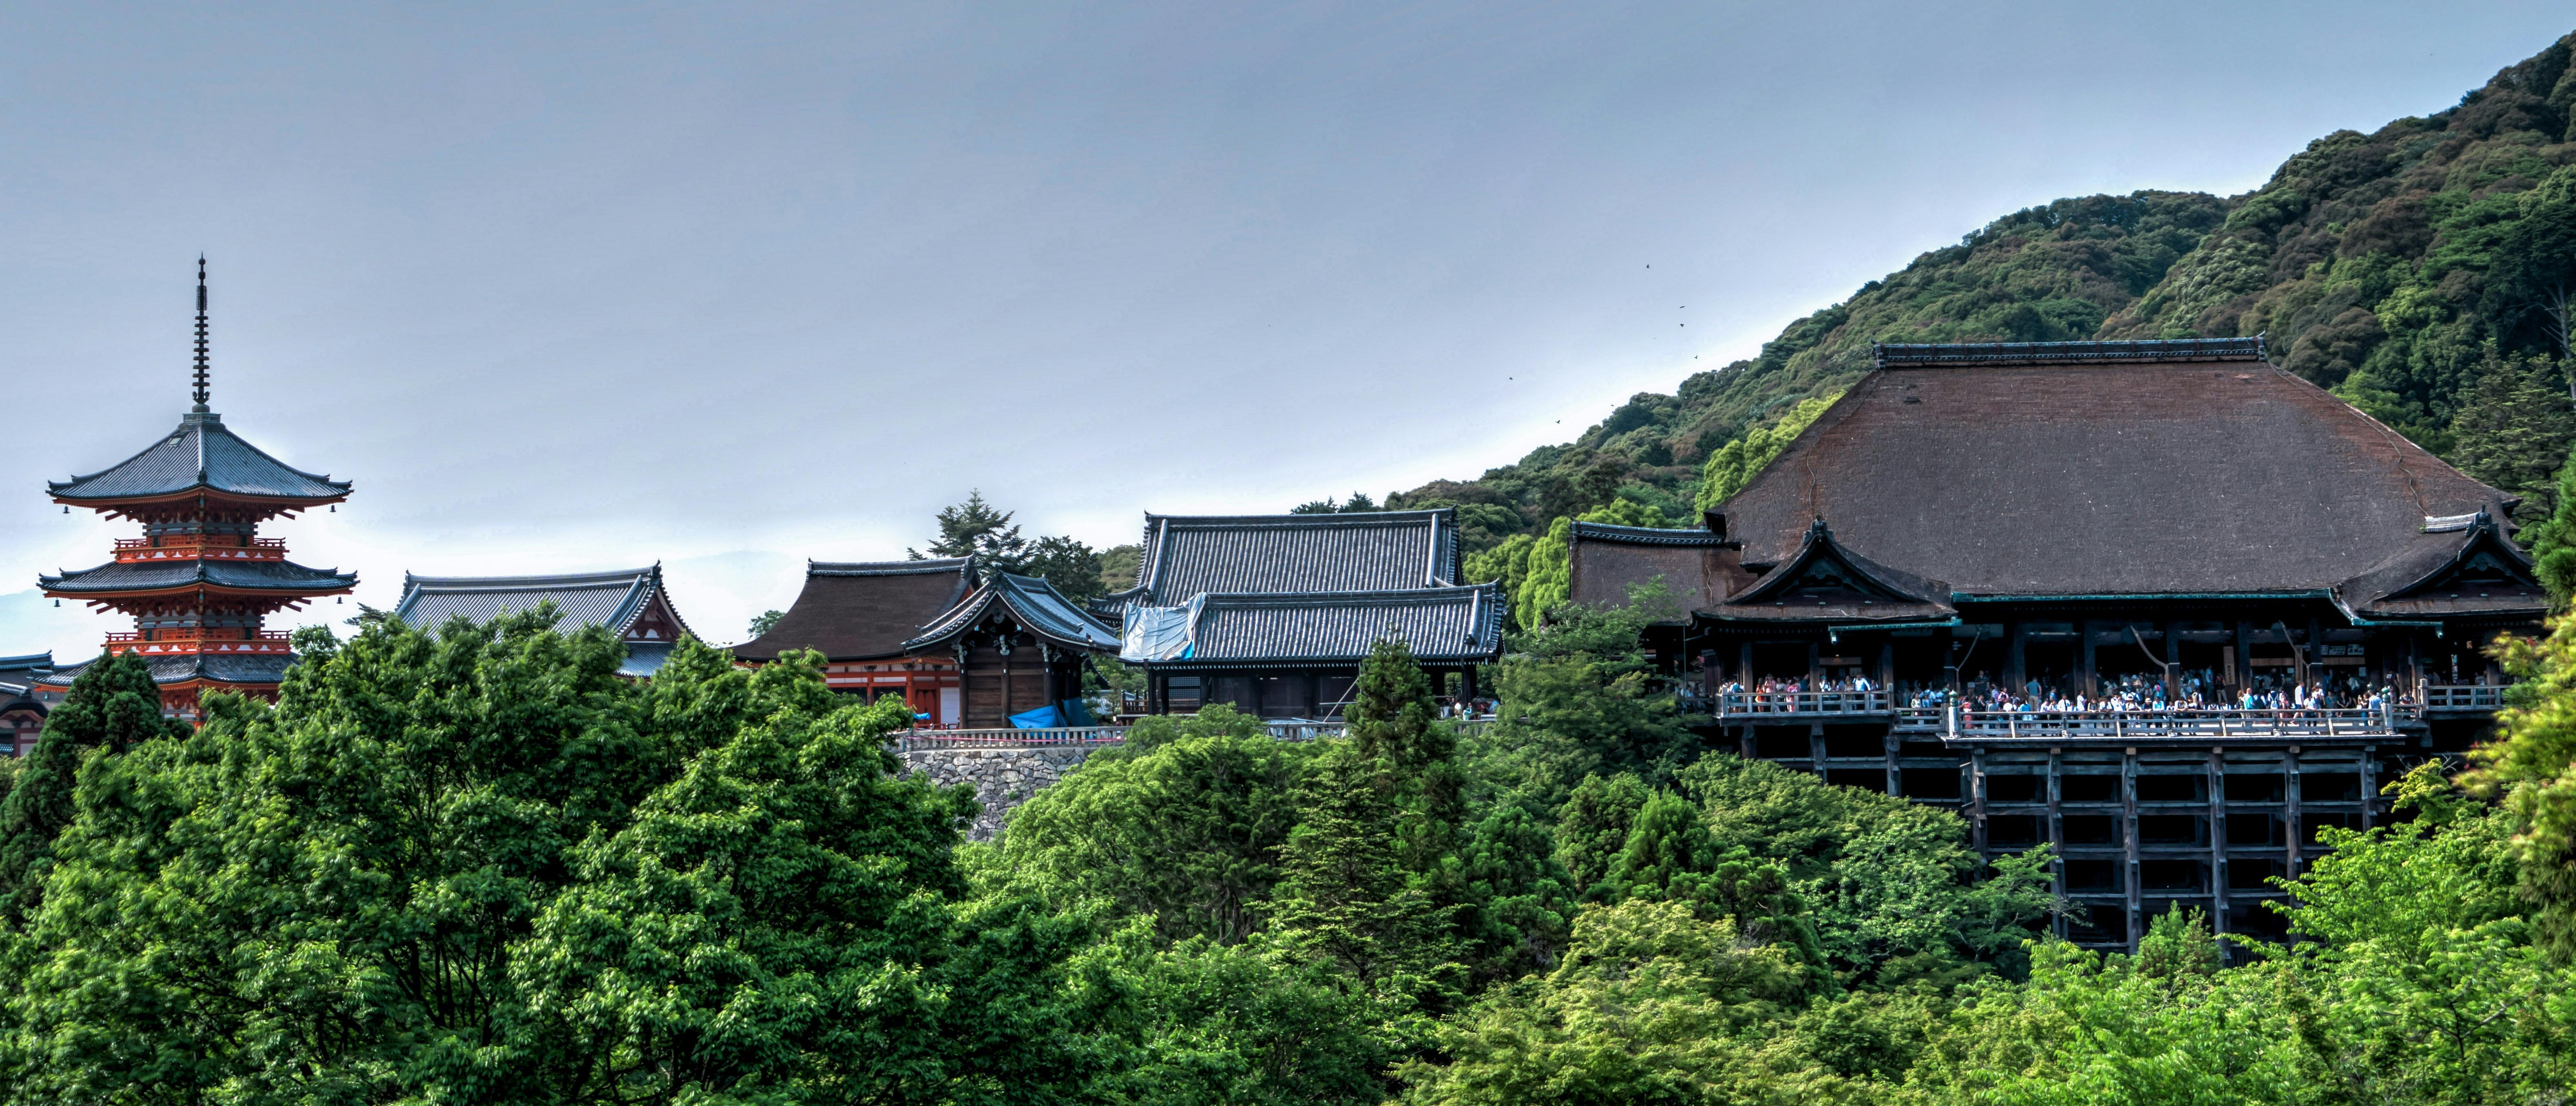 https://static.pexels.com/photos/161150/kiyomizu-dera-temple-kyoto-japan-161150.jpeg